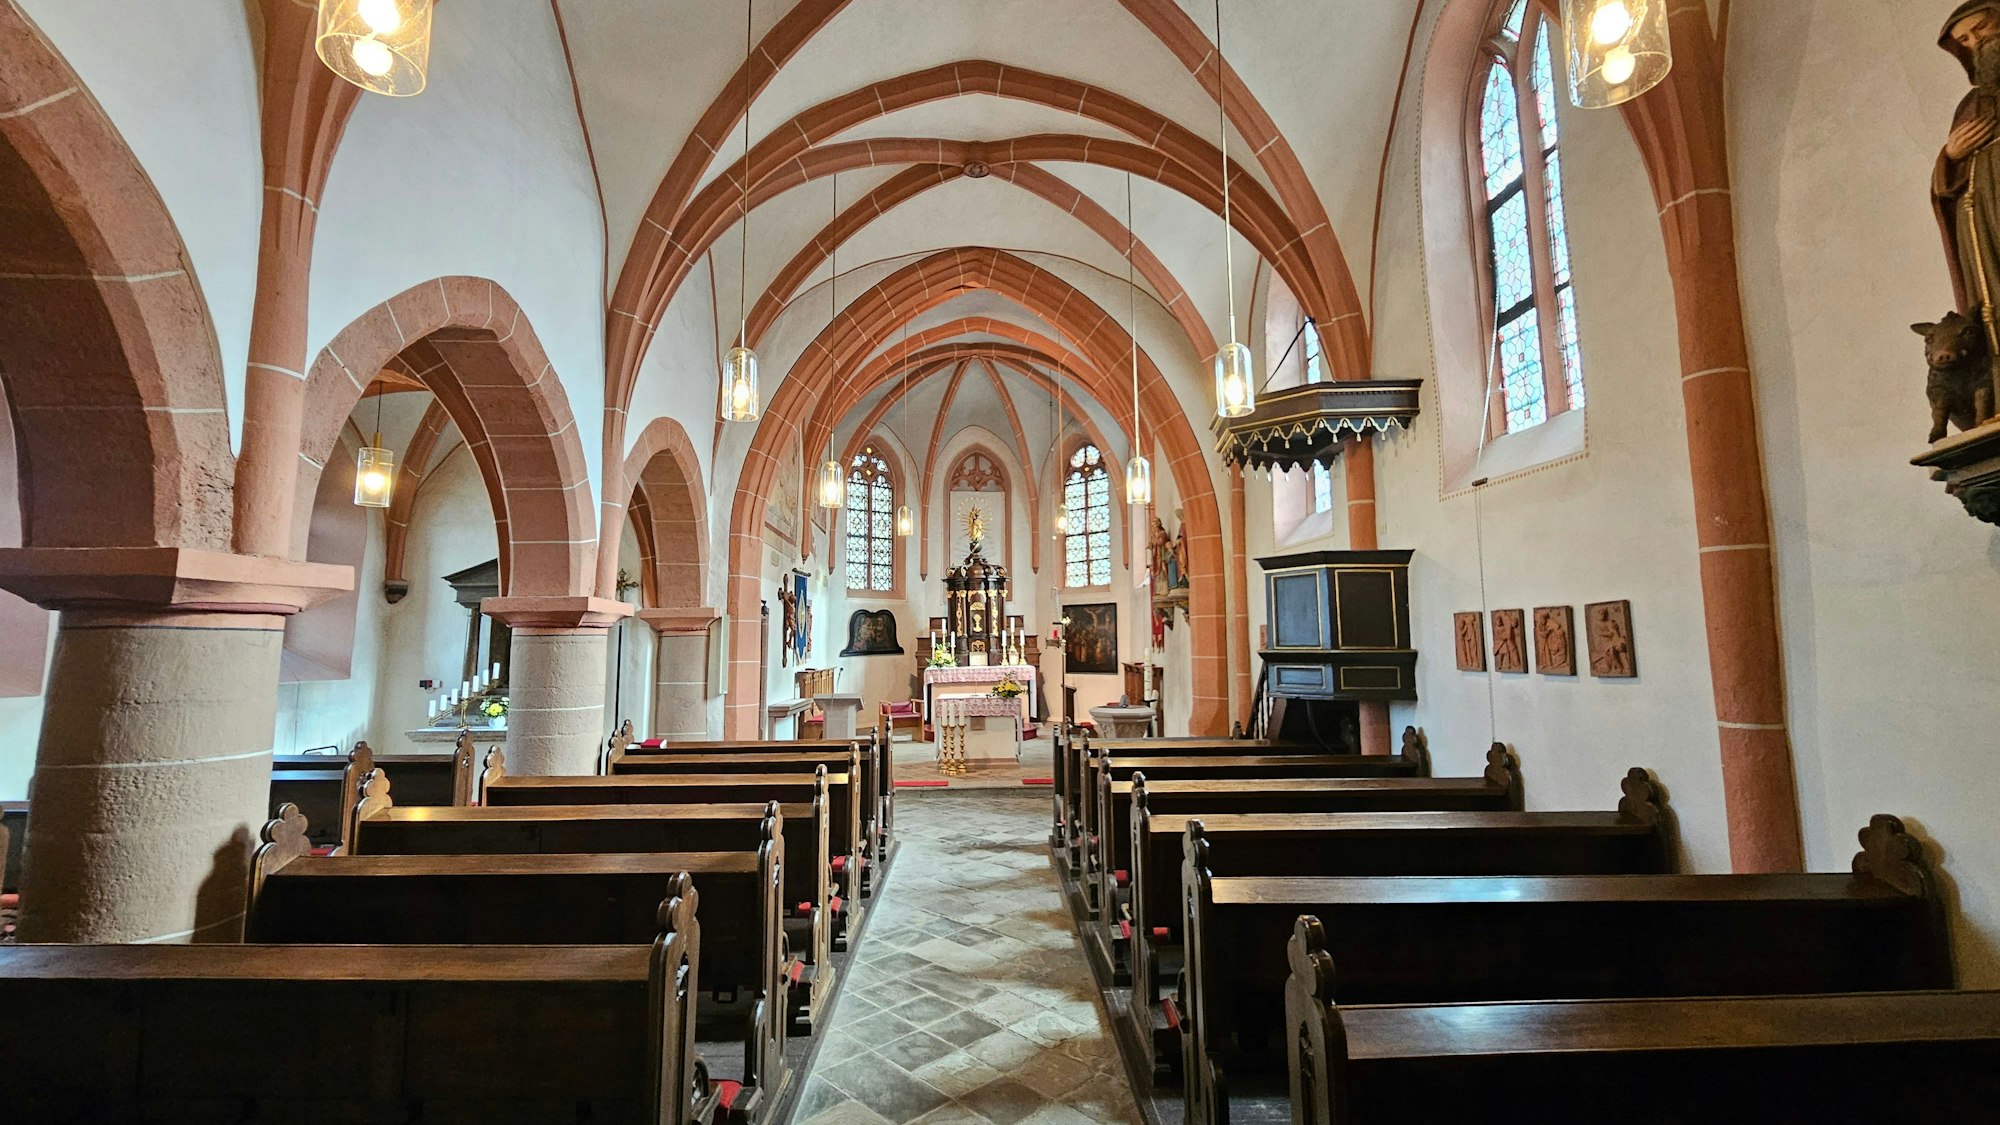 Blick in den Kirchenraum mit Kreuzrippengewölbe.